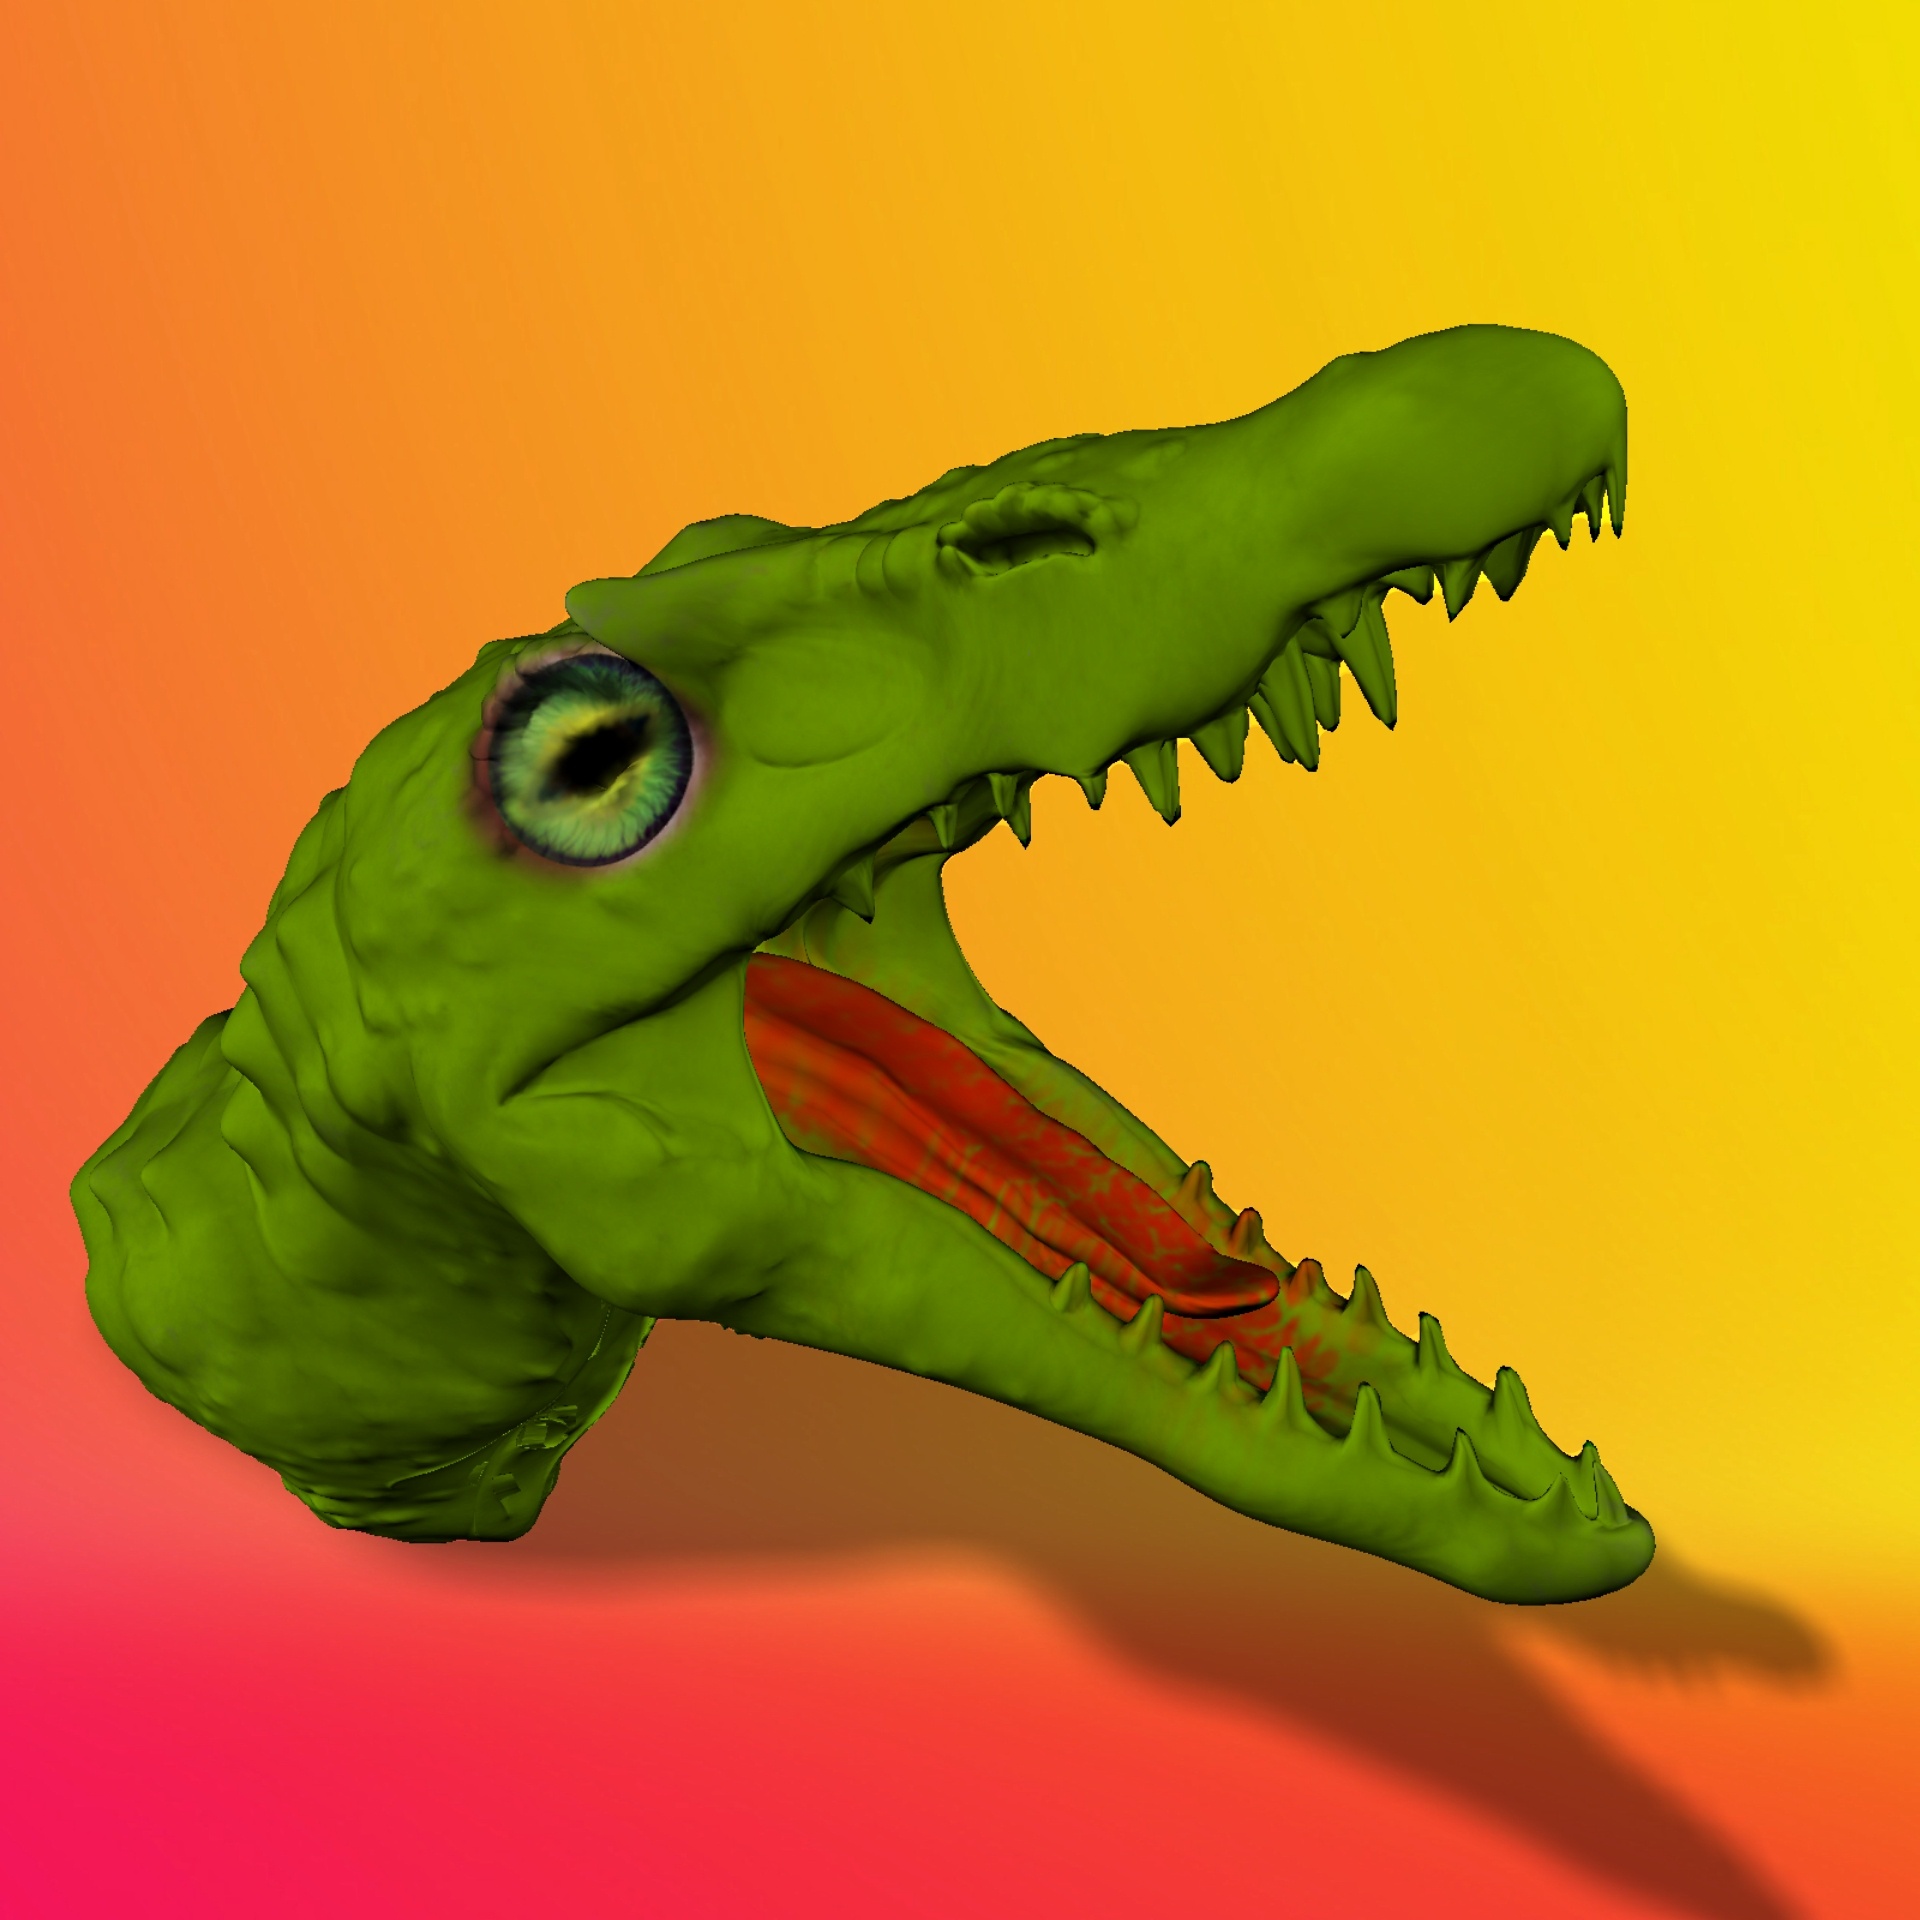 Crocodilo verde